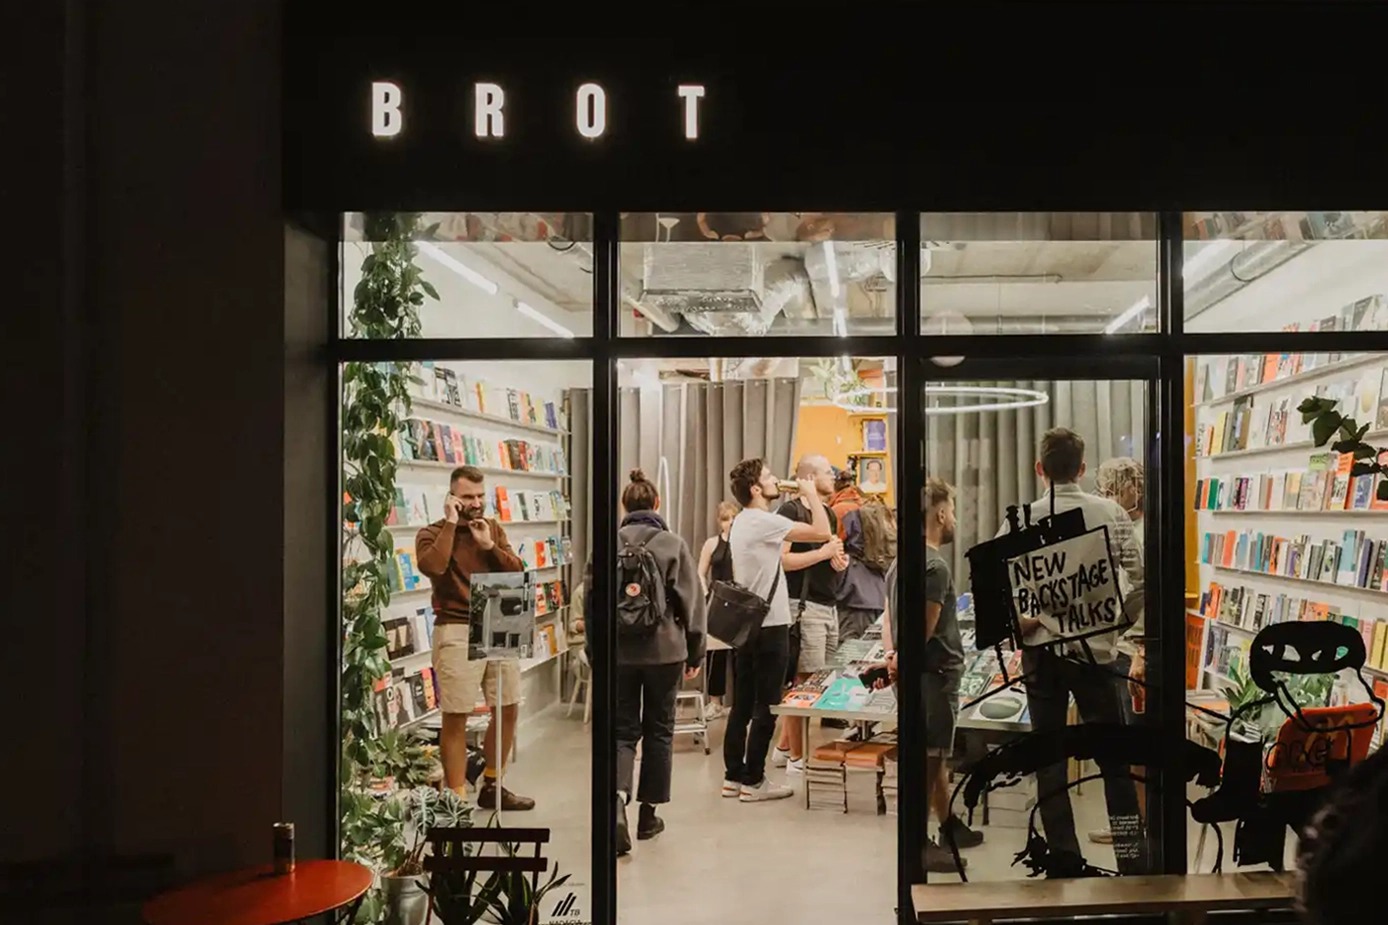 Brot Books Deli – bringing pop culture to Bratislava